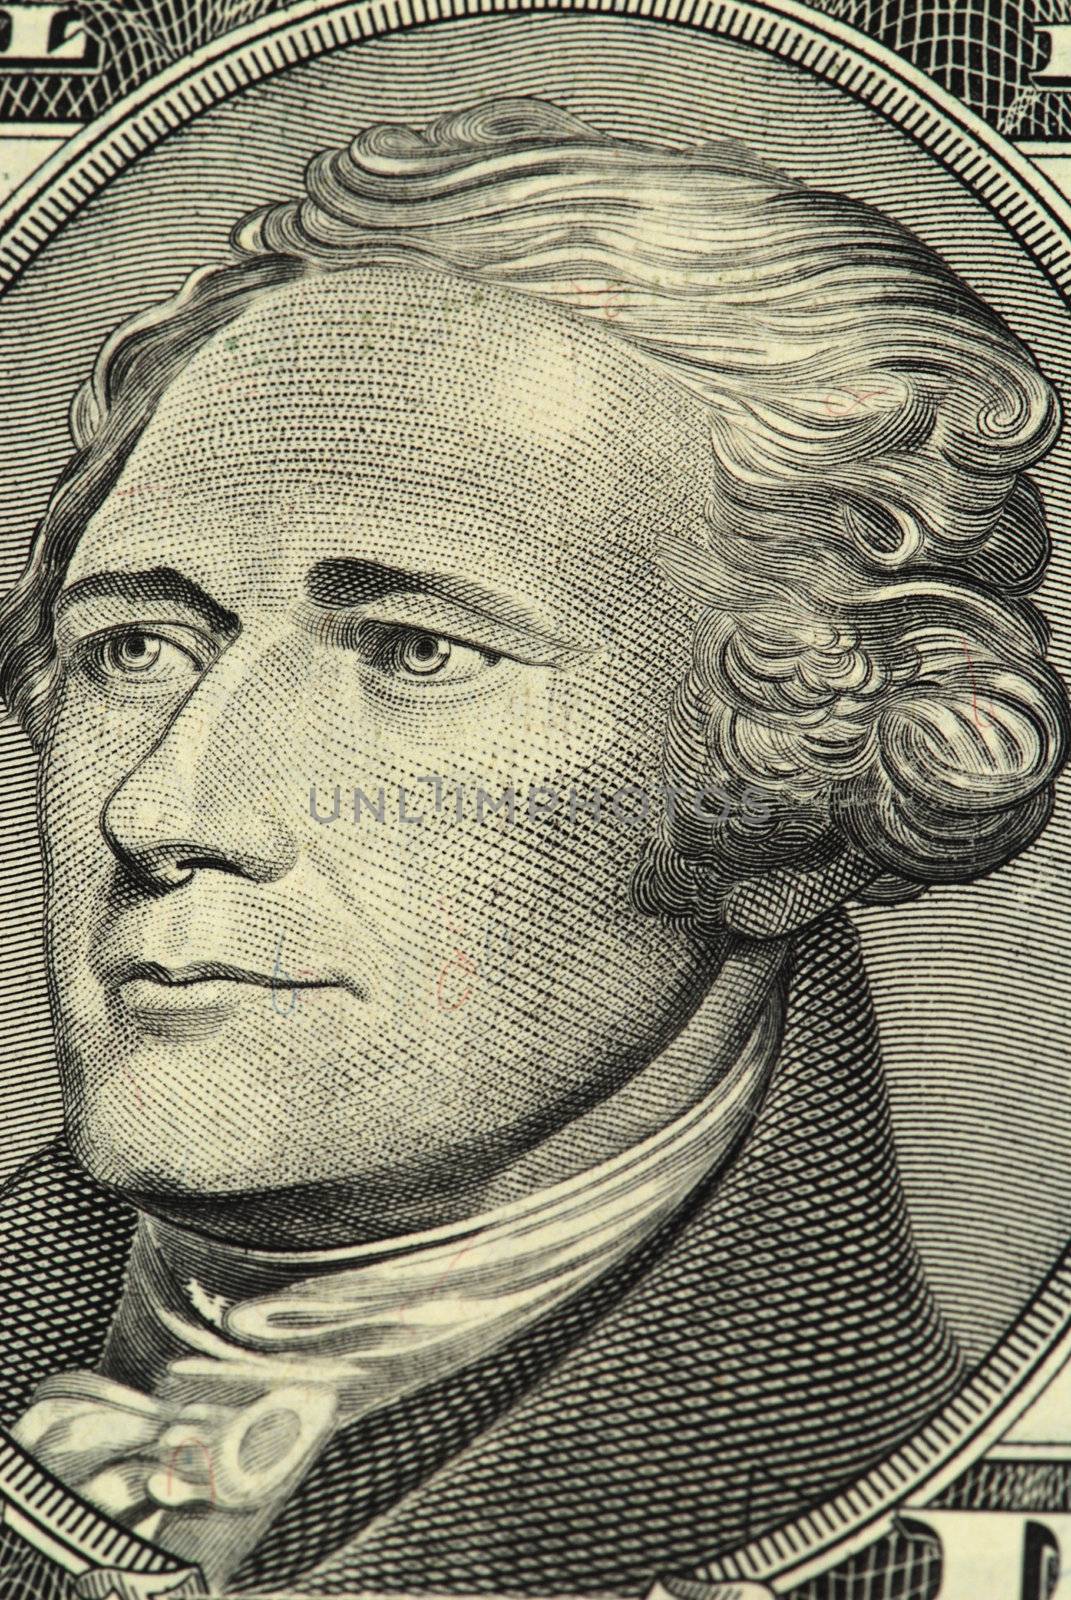 Hamilton portrait from a ten dollar banknote